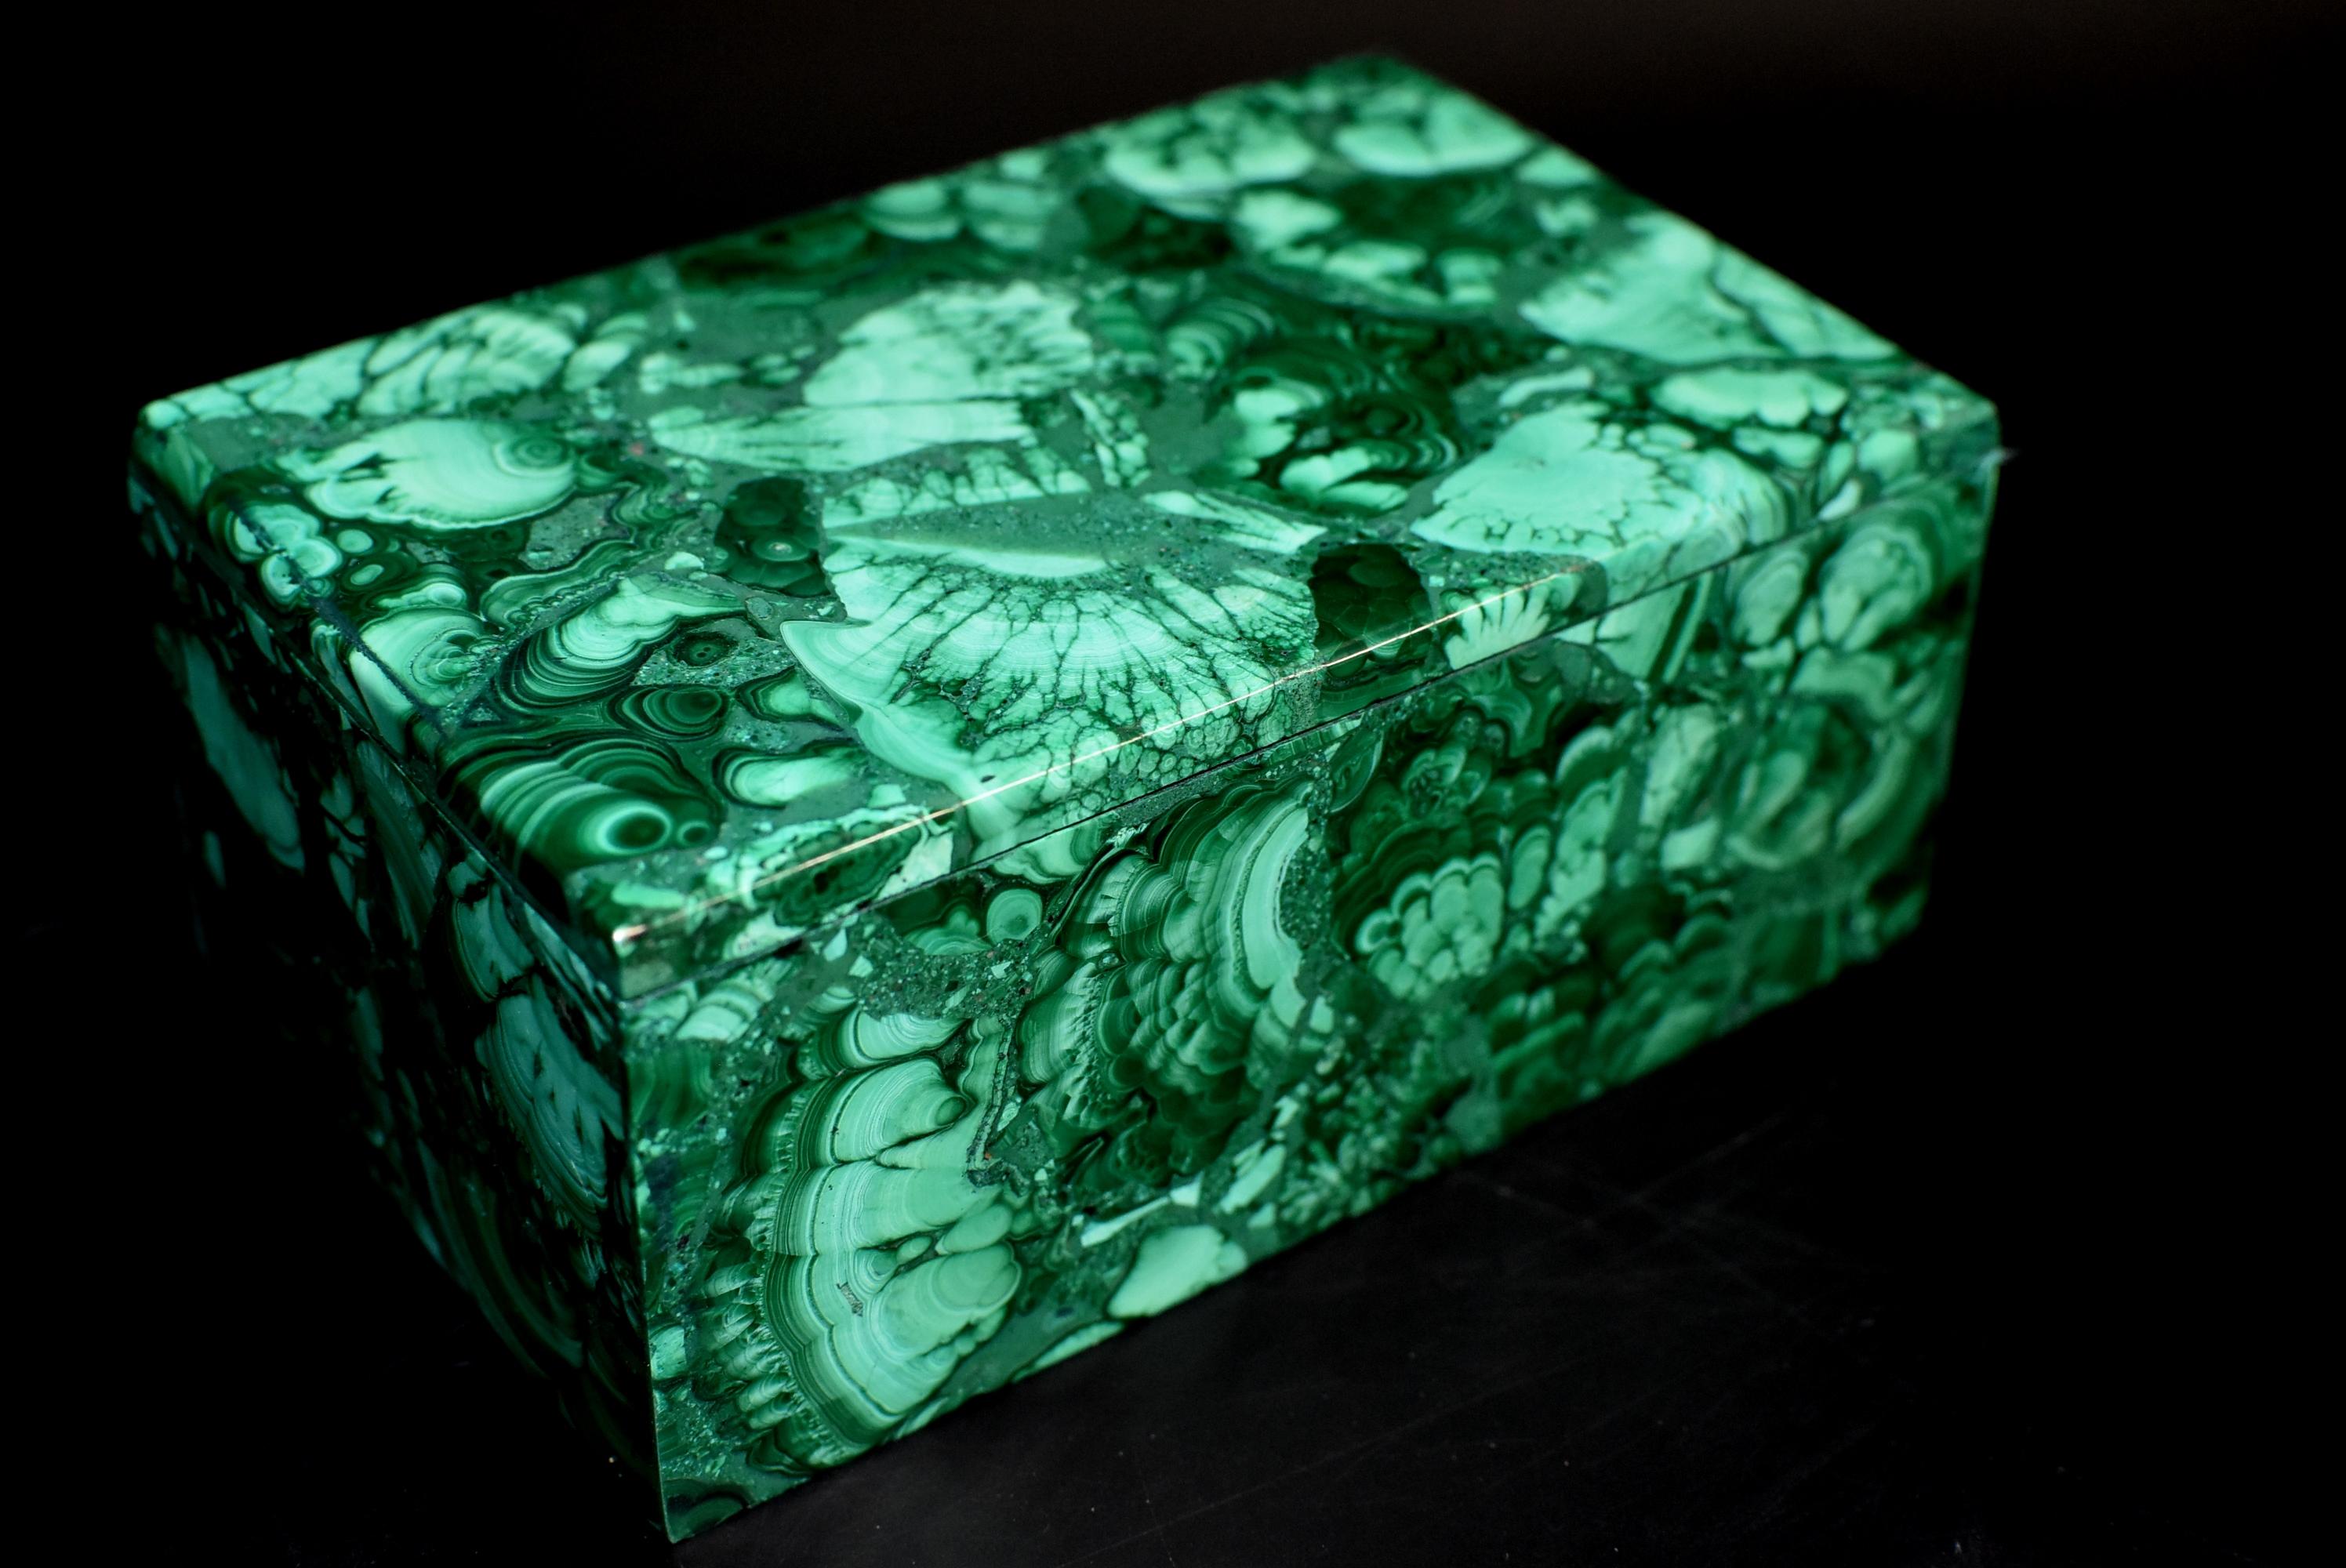 Hand-Crafted Large Natural Malachite Box, 3 lb, Full Slab Gem Stone Jewelry Box